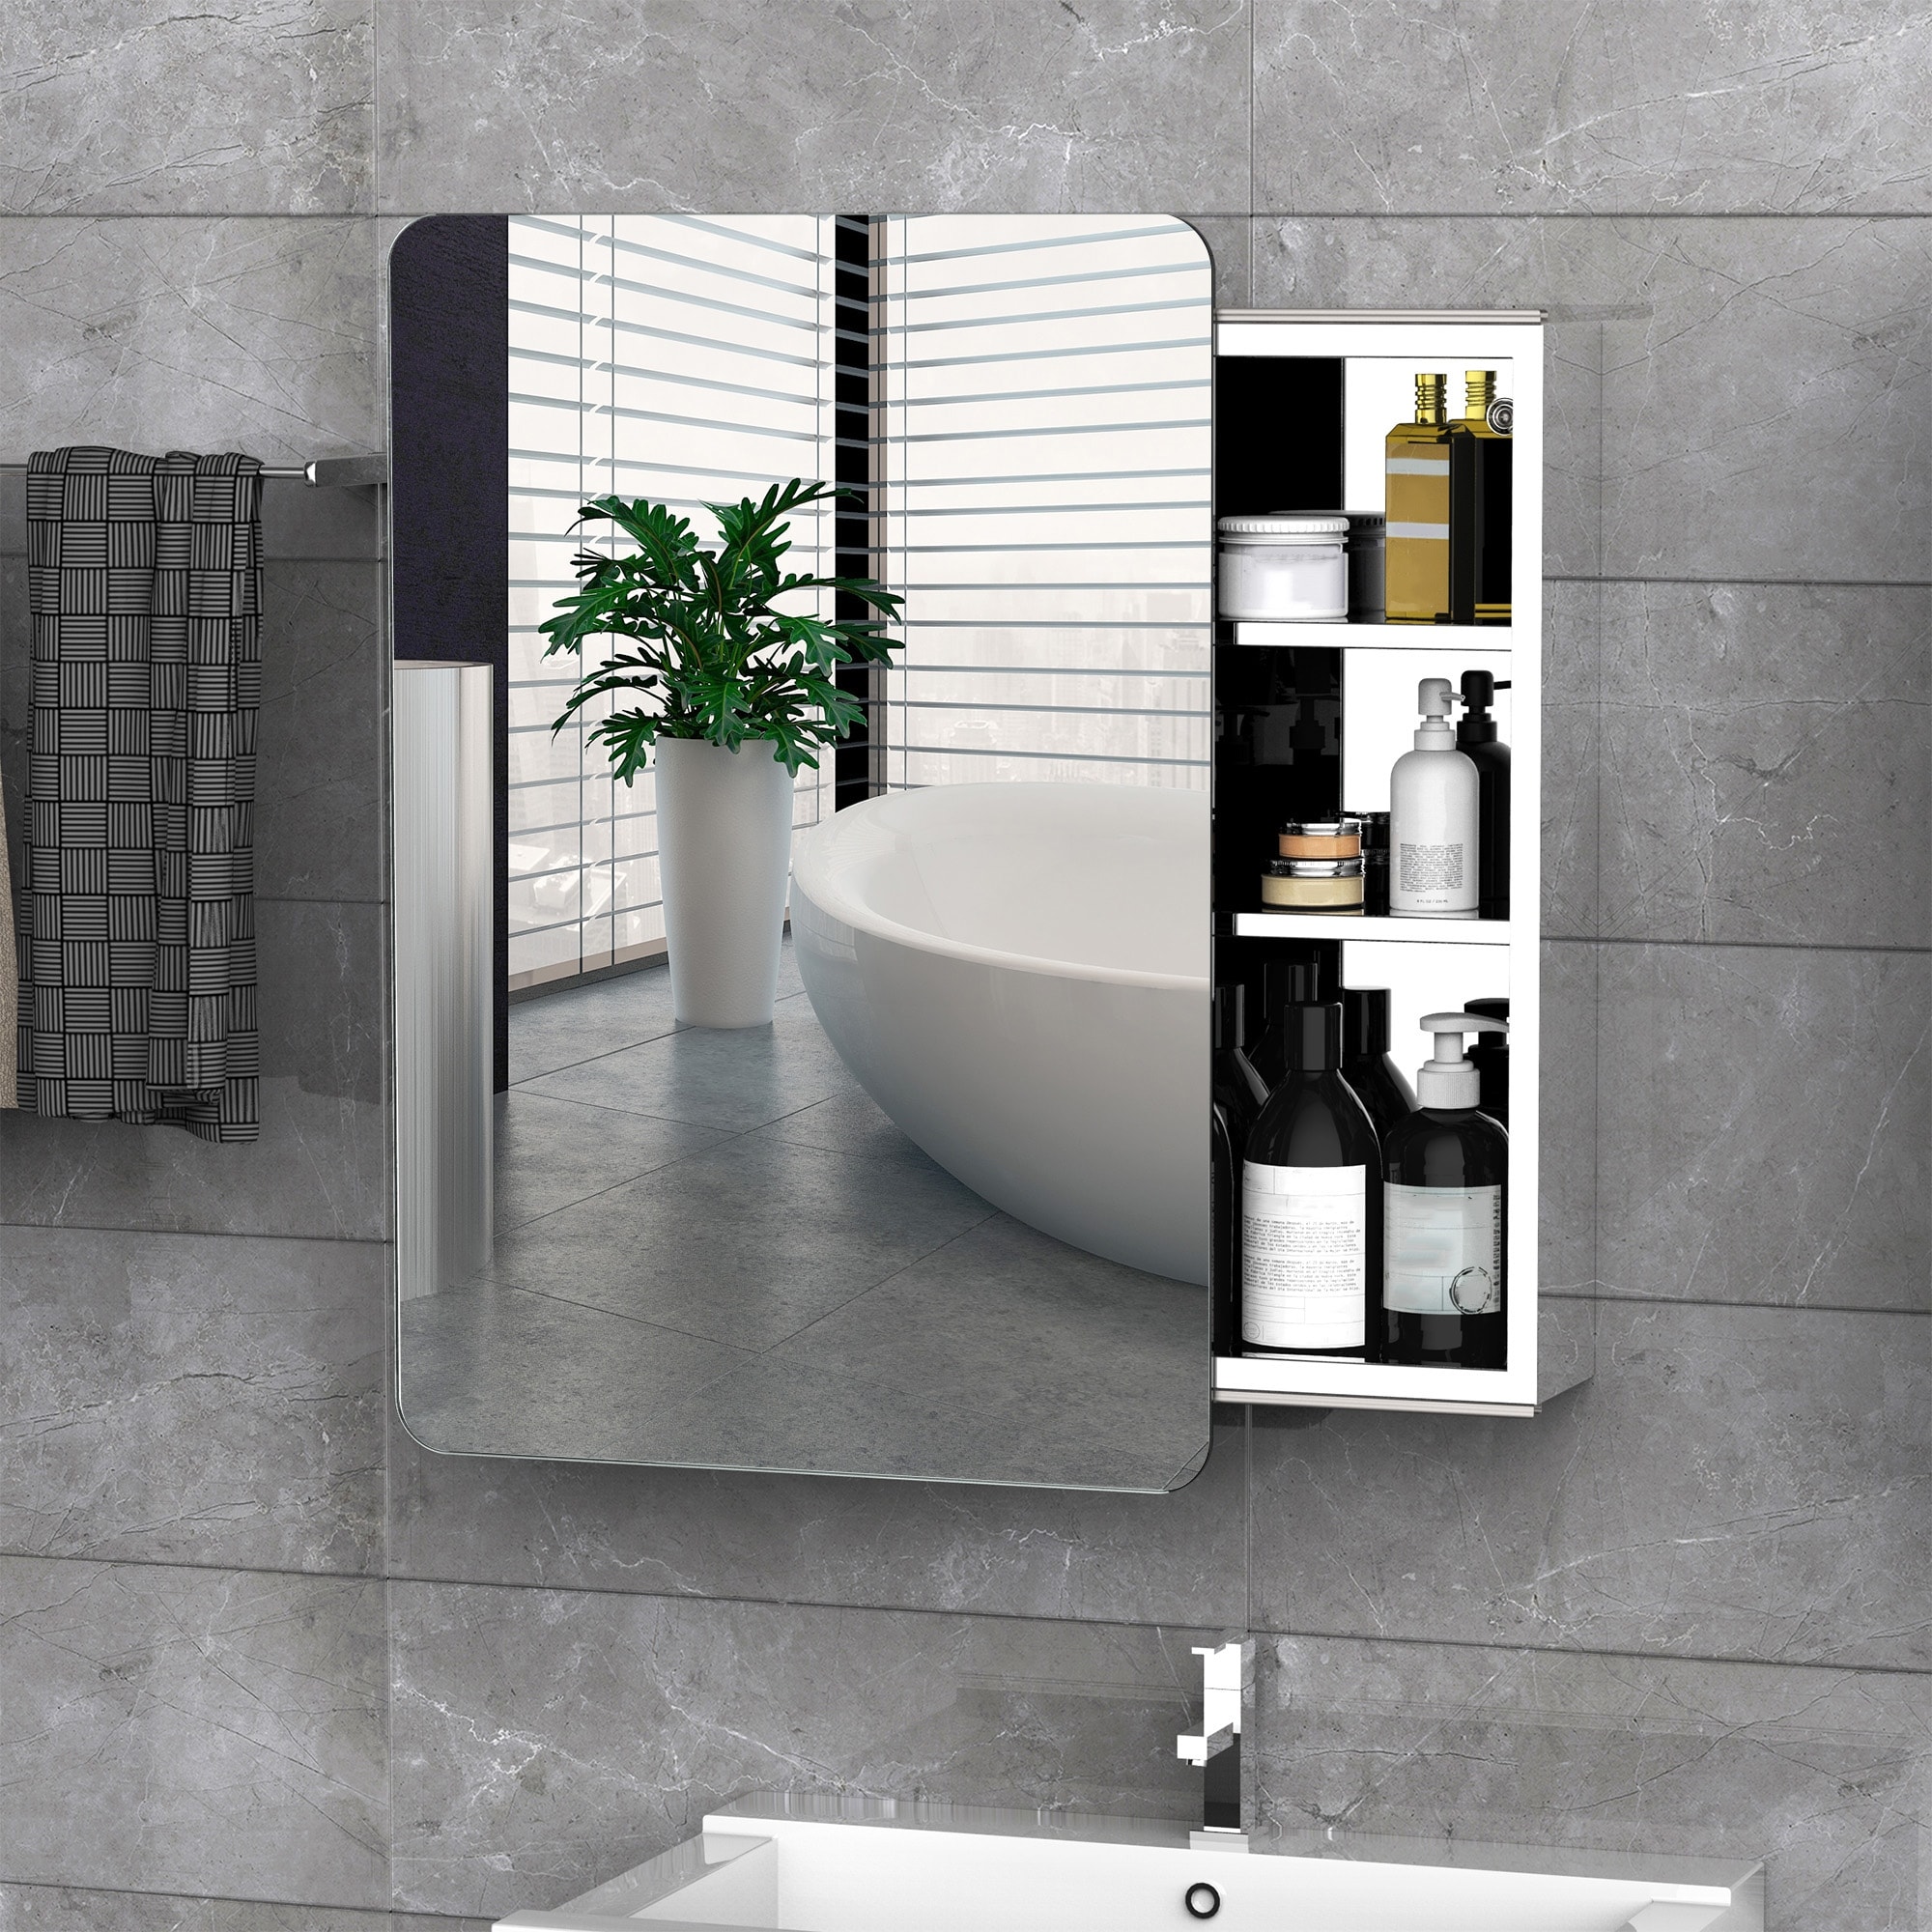 kleankin Stainless Steel Wall Mount Bathroom Medicine Cabinet with Mirror Storage Organizer Double Doors Silver